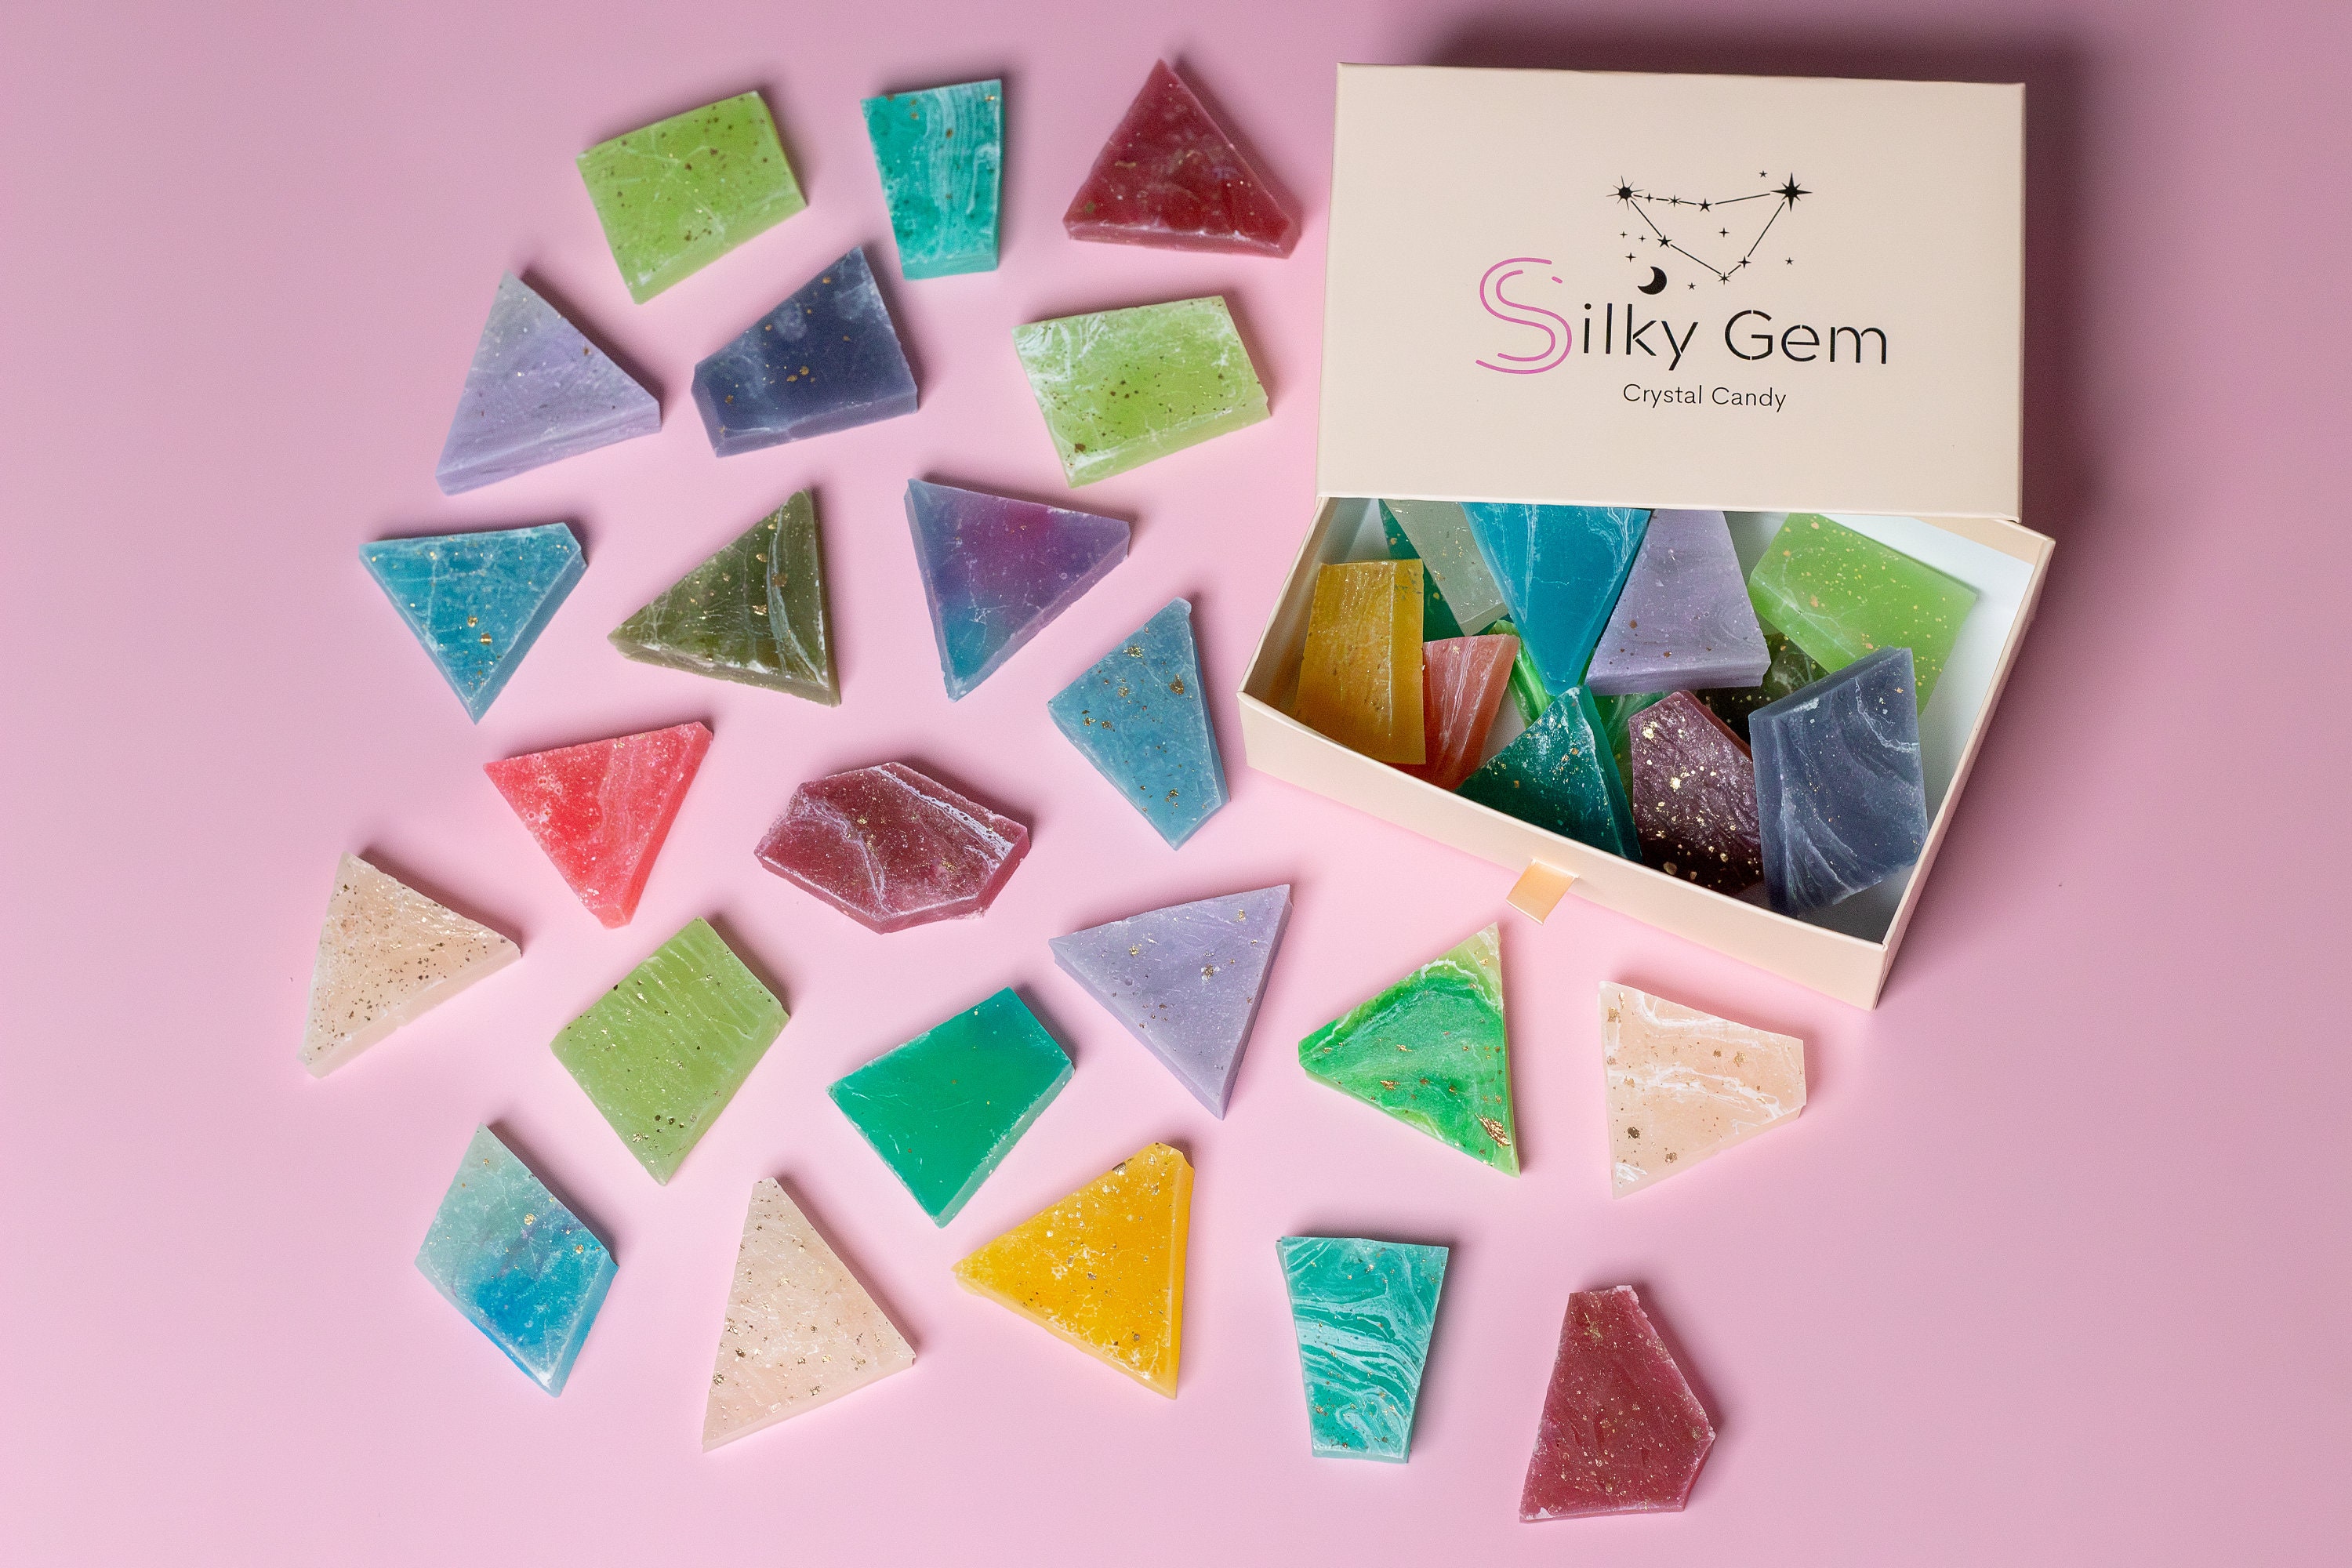  Silky Gem - Edible Crystal Candy, 8-10 Clusters, White  Chocolate Mint Flavored, Kohakutou, Edible Gem, Vegan, Gluten Free, ASMR :  Everything Else